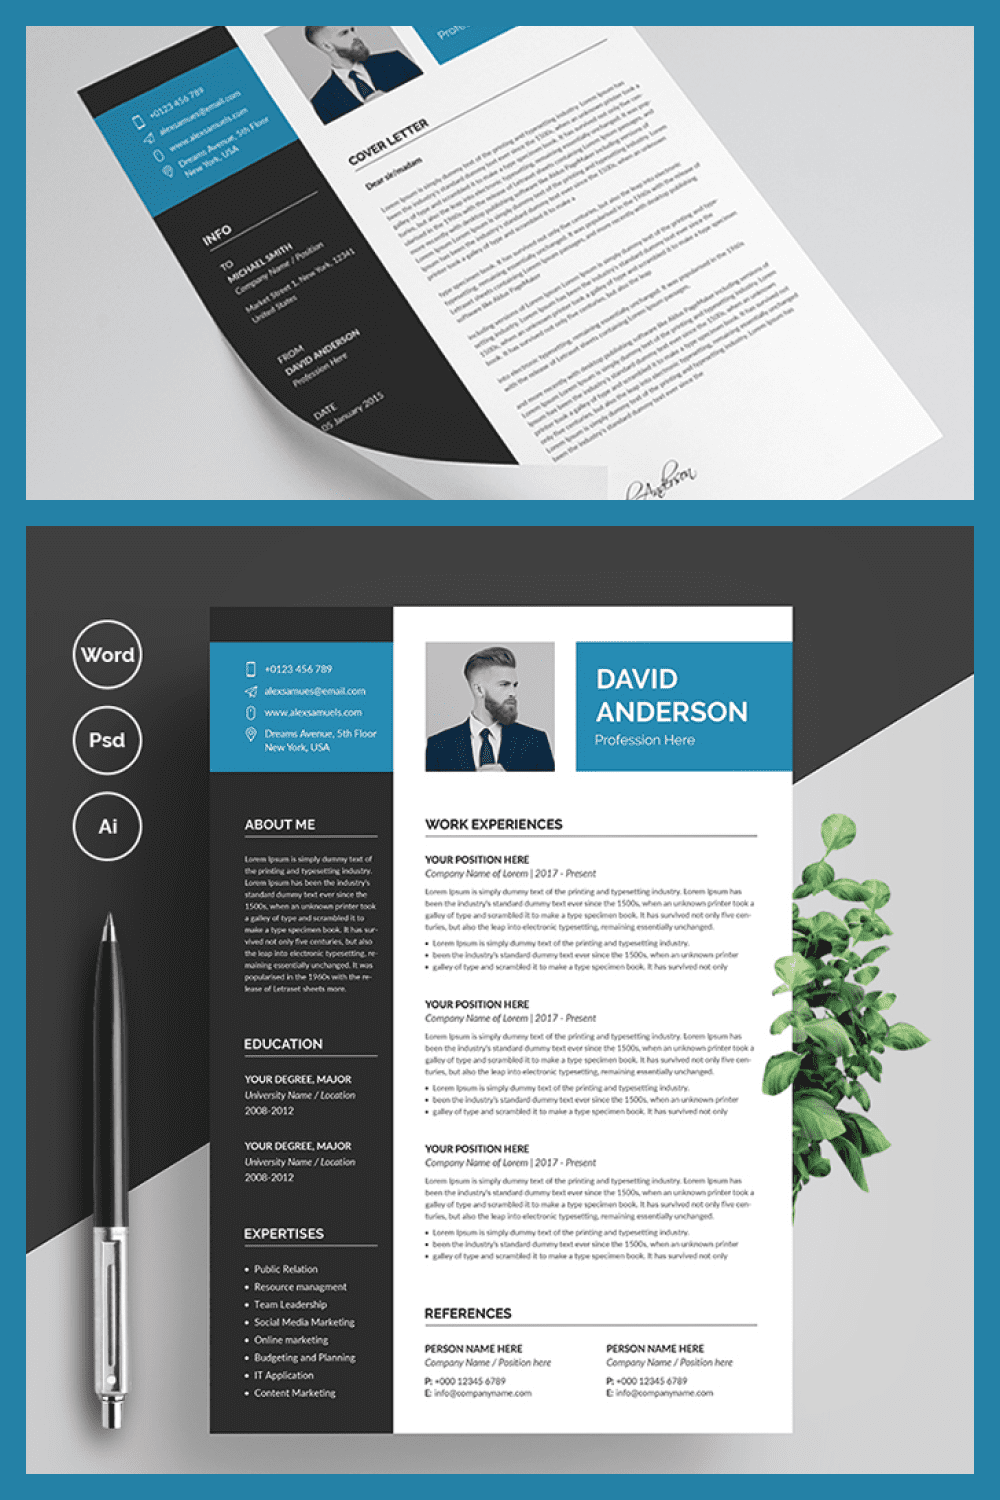 Professional Resume CV Template - MasterBundles - Pinterest Collage Image.